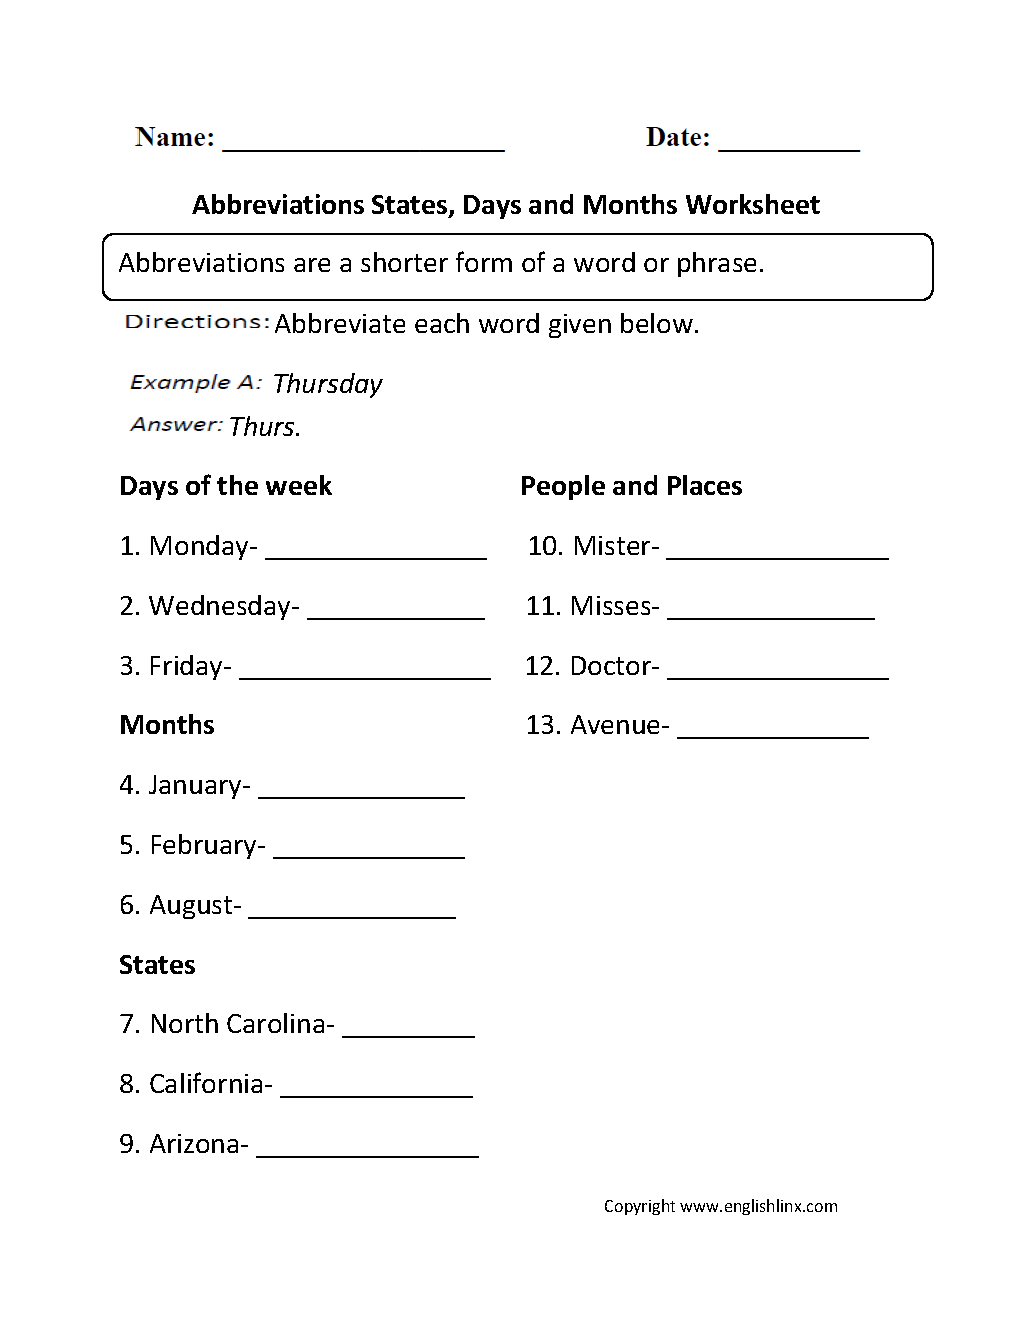 Englishlinx  Abbreviations Worksheets For 50 States Worksheets Pdf